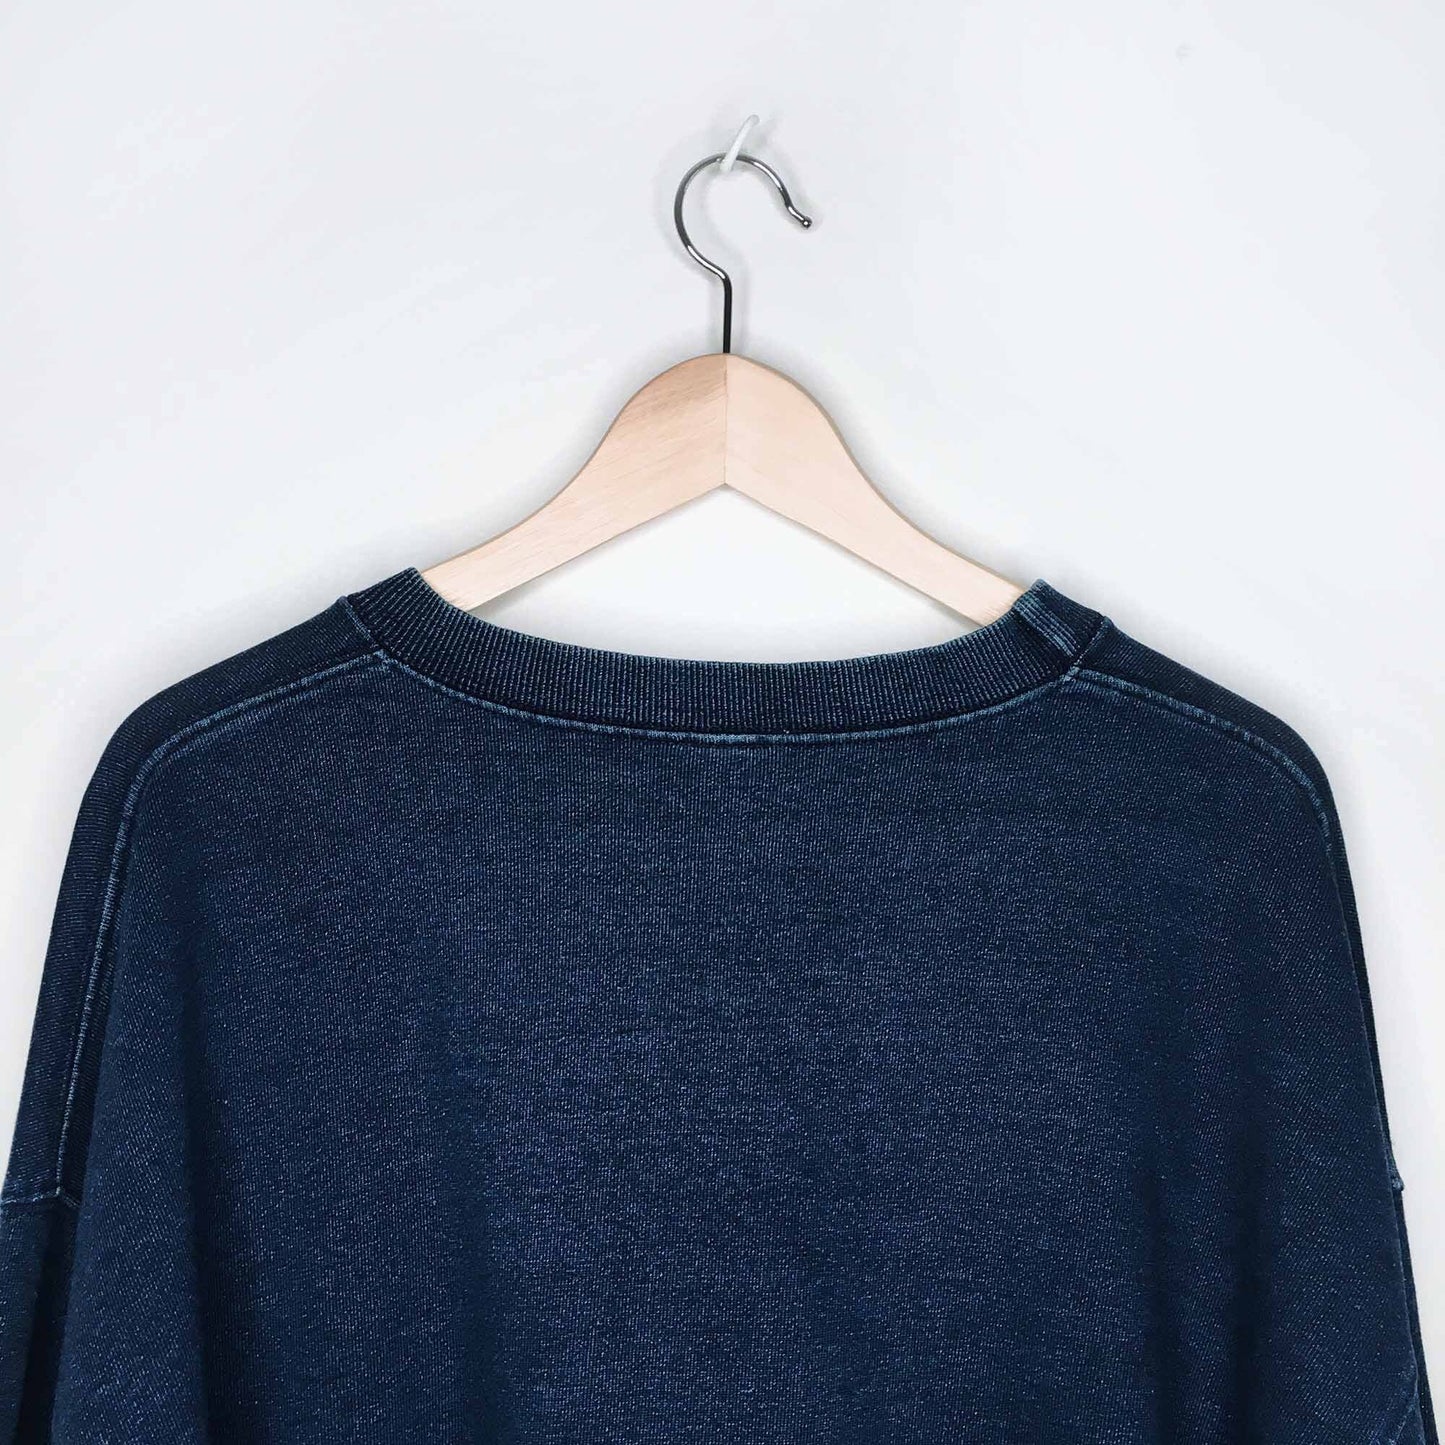 American Apparel Indigo cropped sweatshirt - size xl